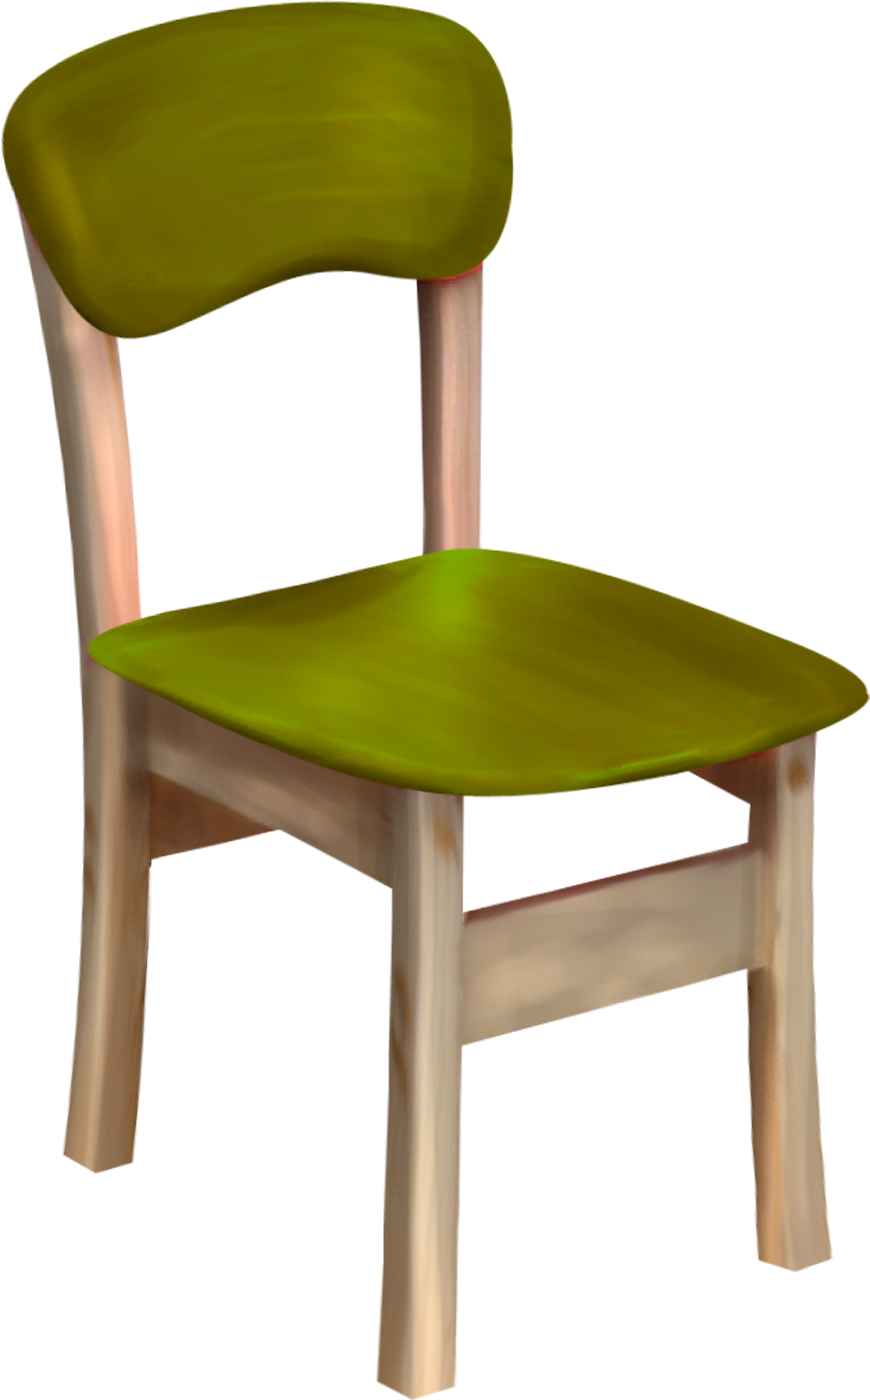 Imágenes infantiles- silla verde Adtimetosleep39